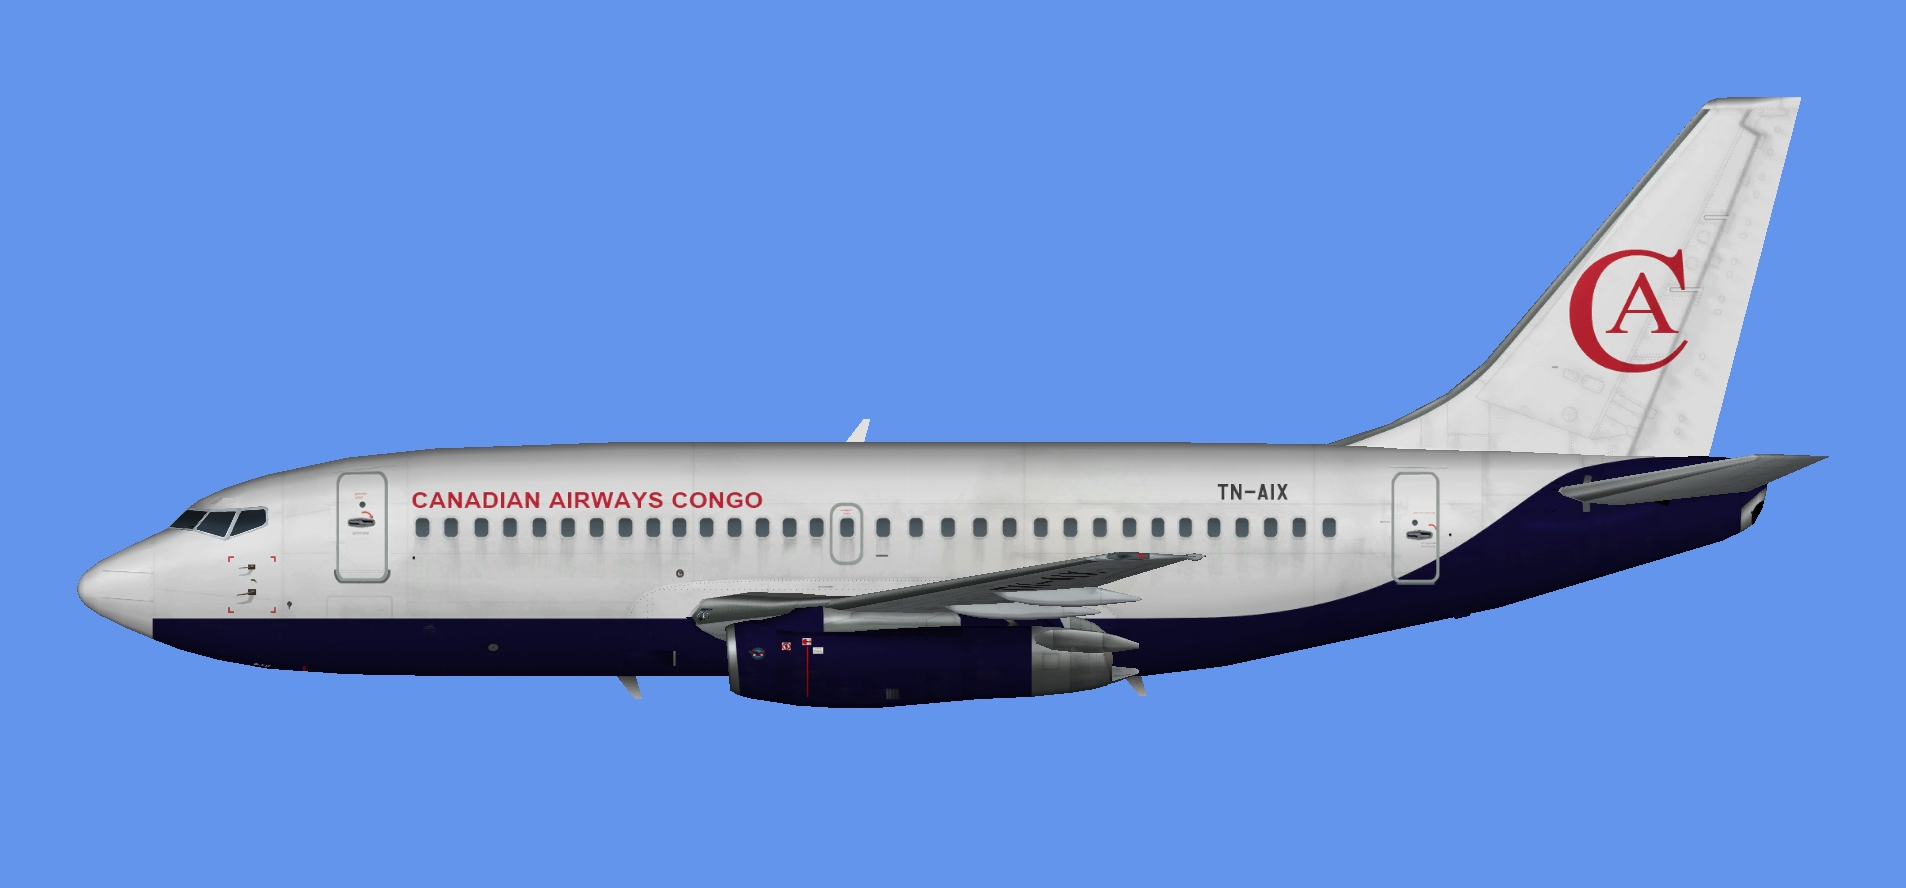 Canadian Airways Congo Boeing 737-200